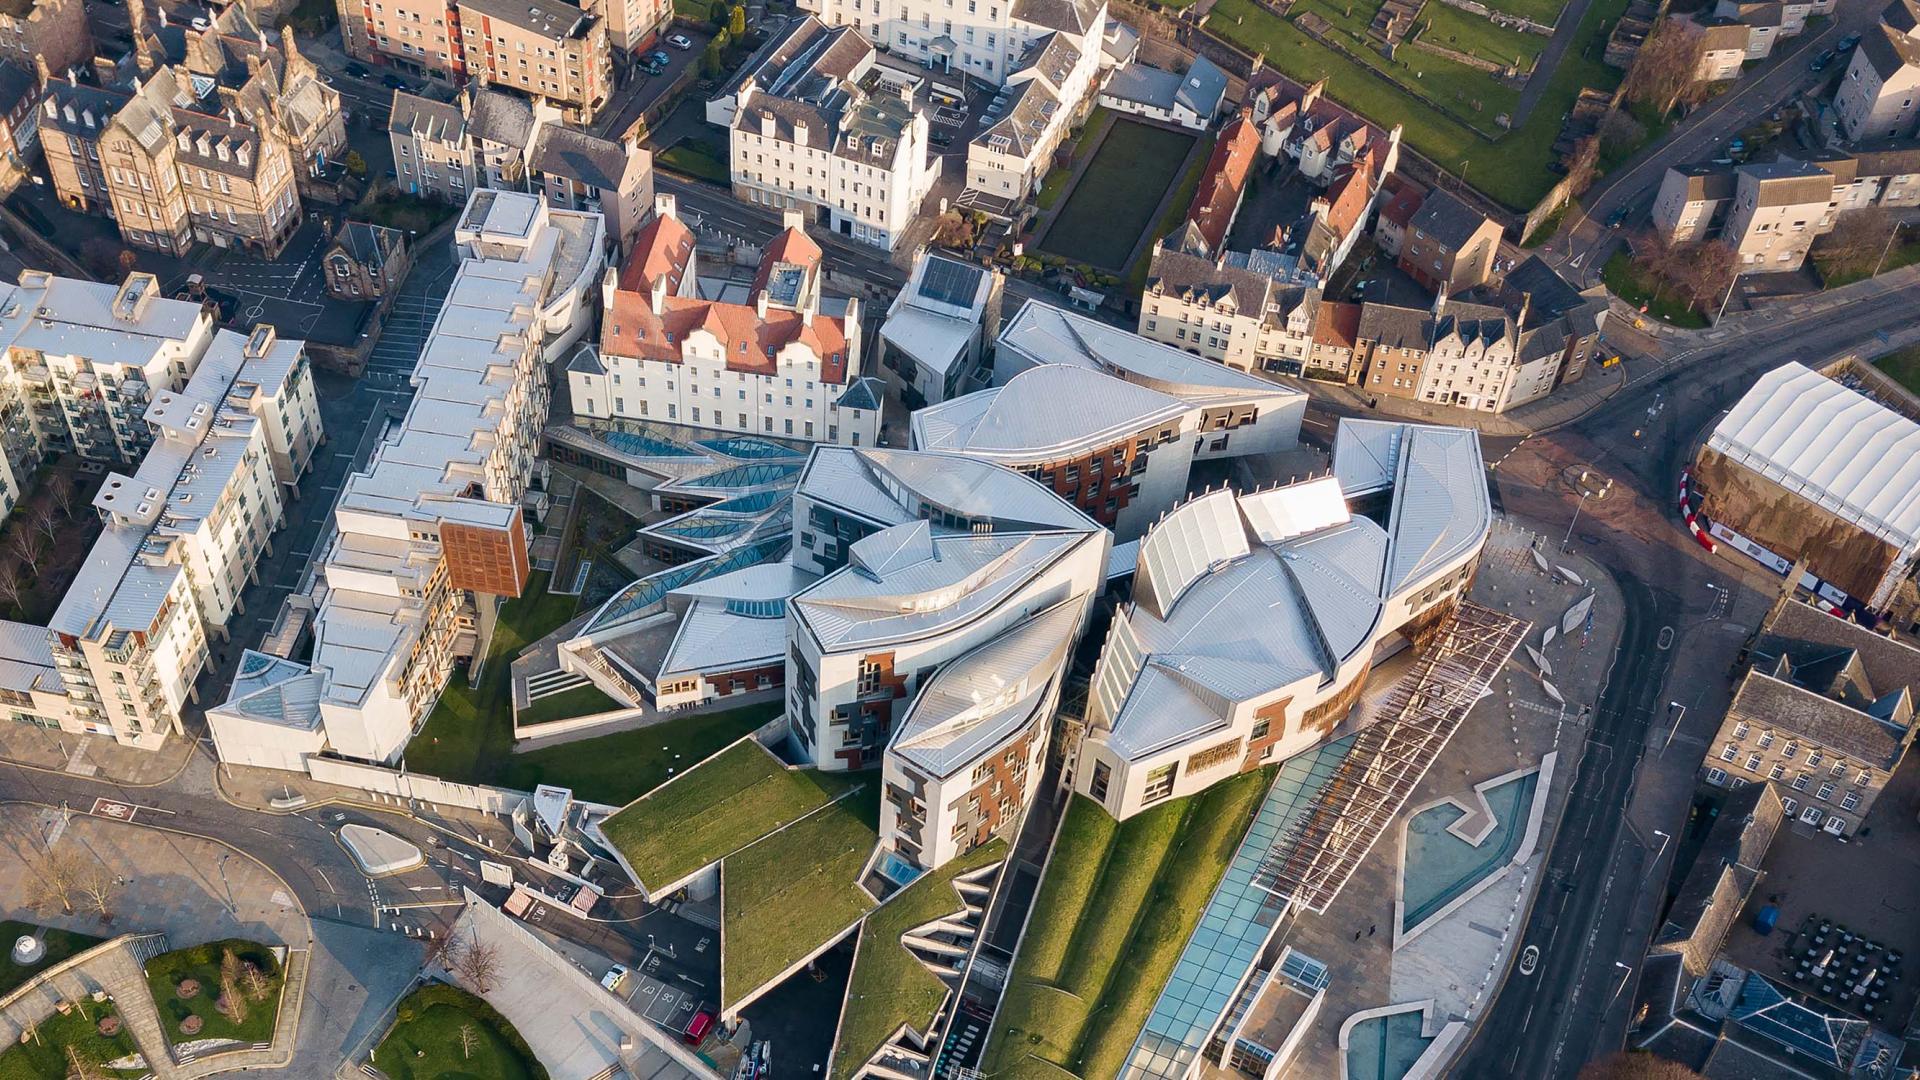 Aerial view of Scottish Parliament